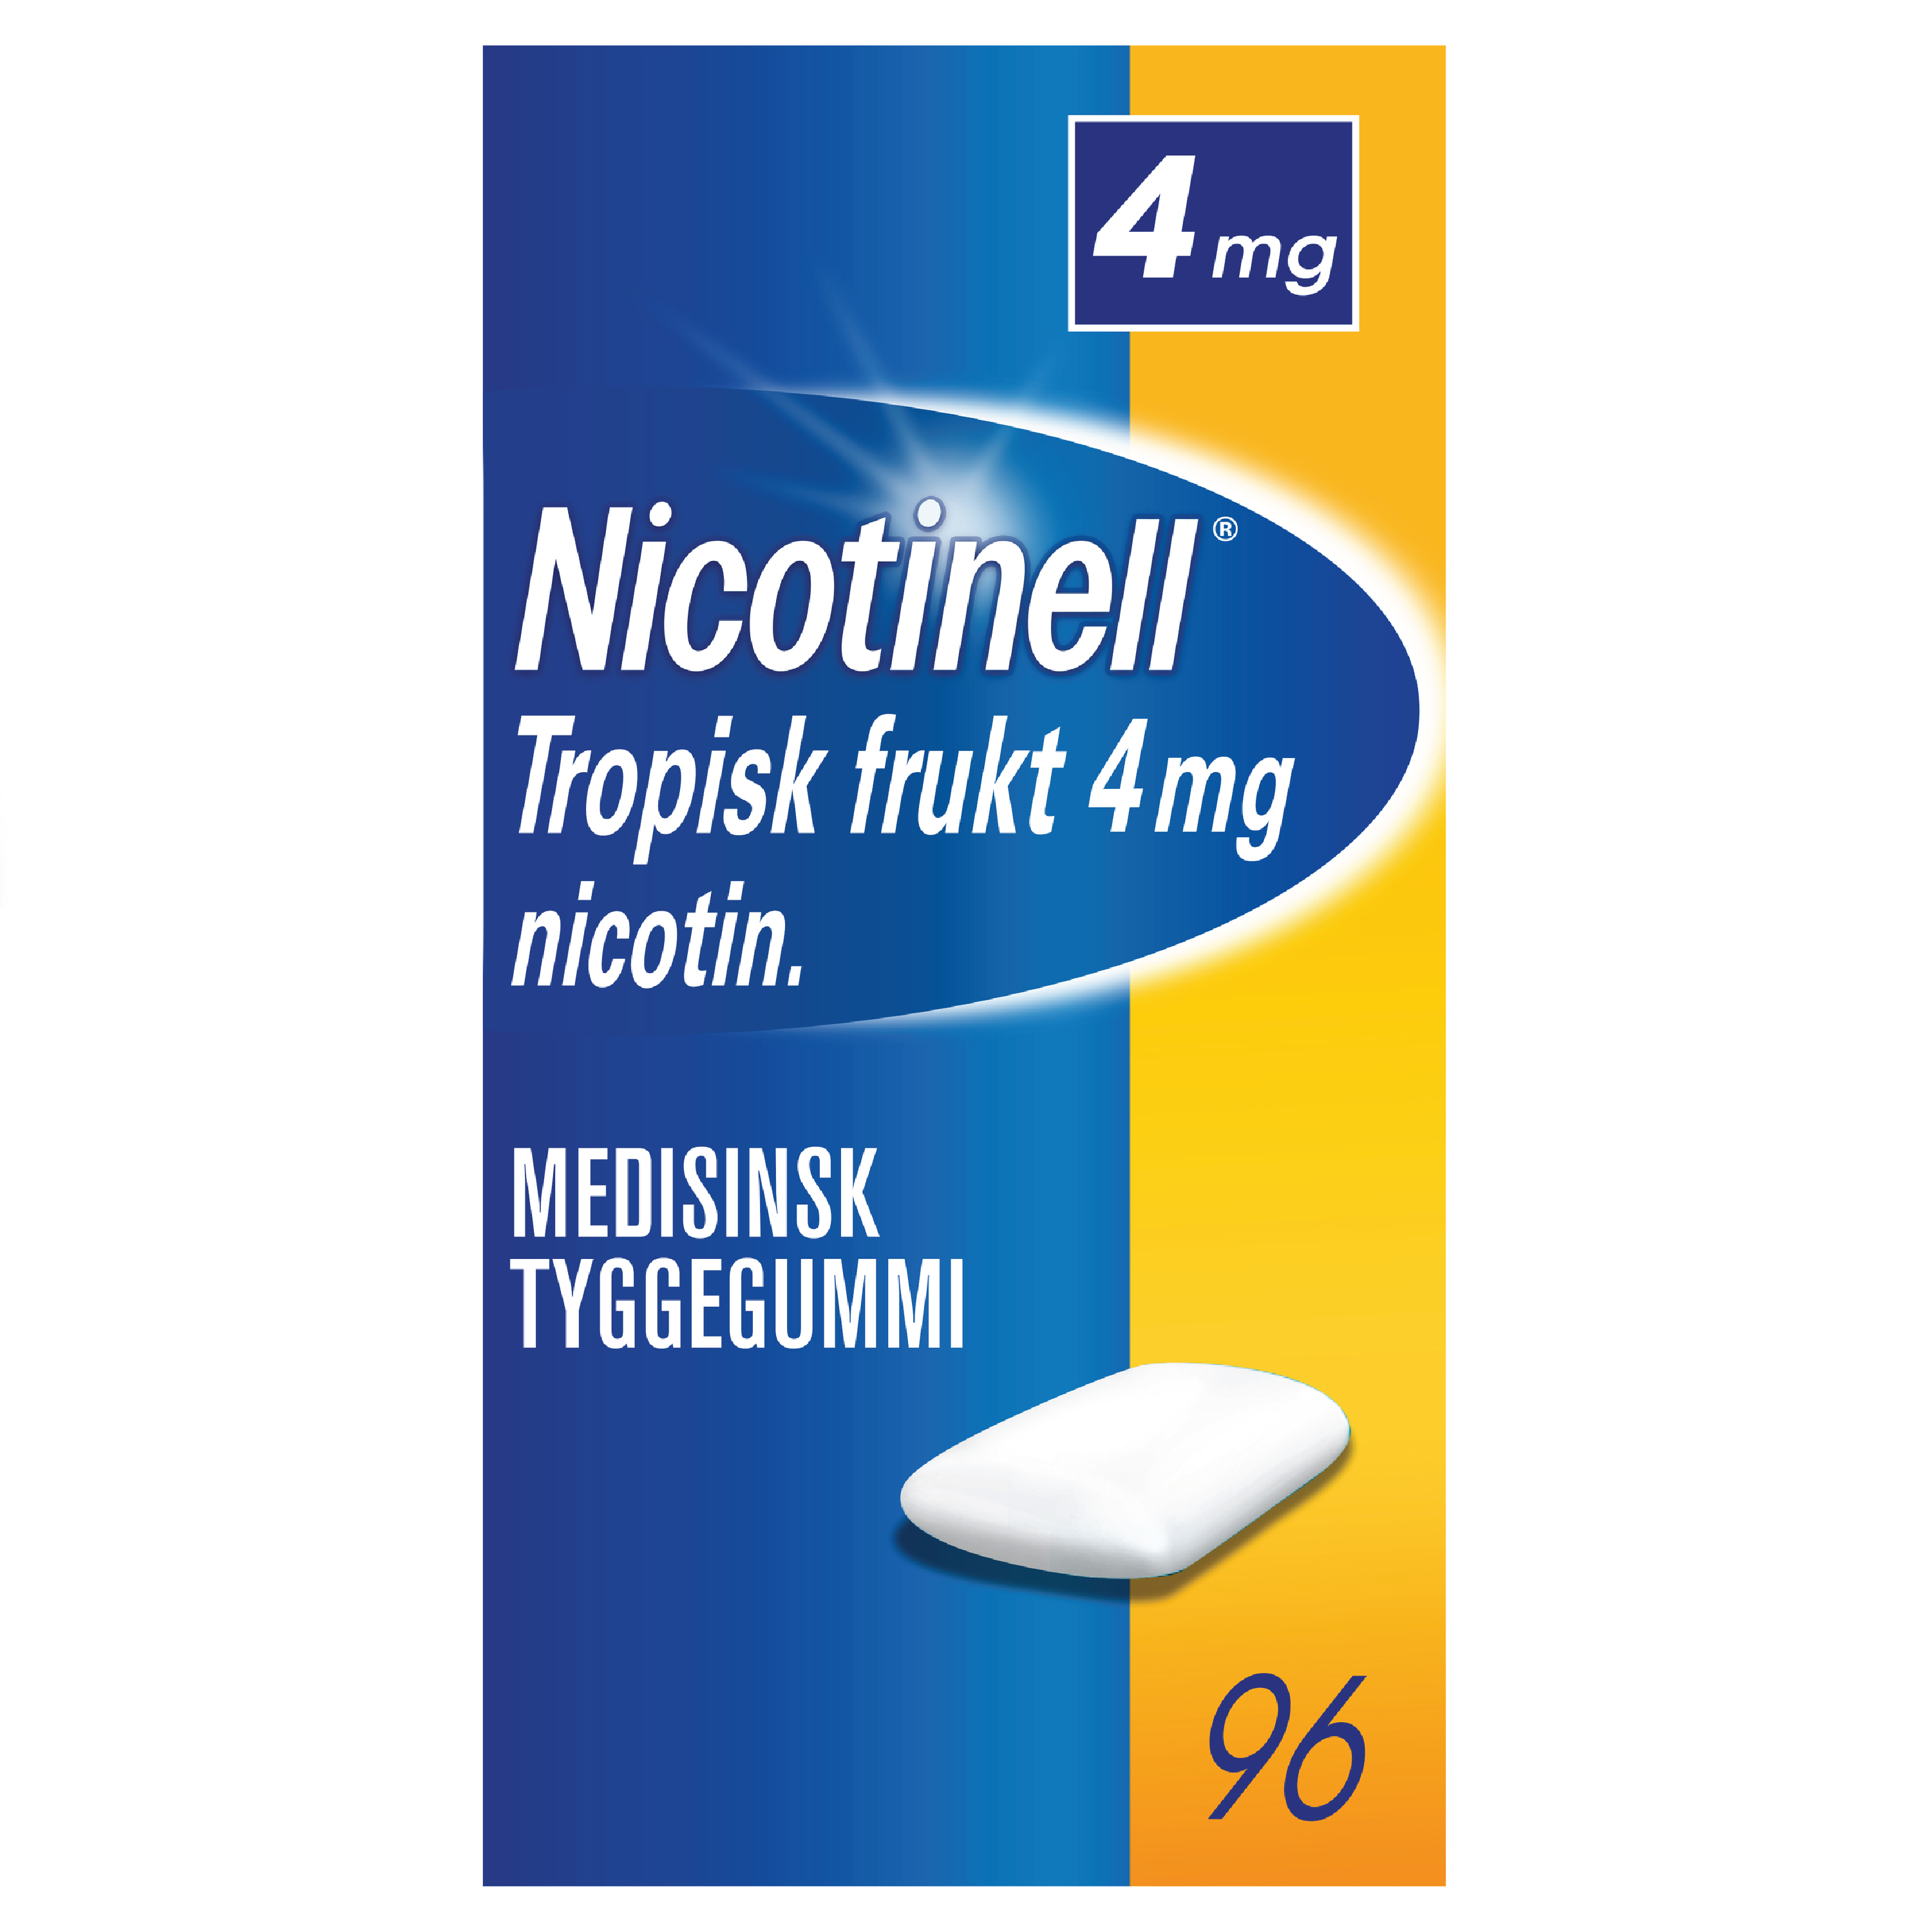 Nicotinell Tyggegummi 4mg tropisk frukt, 96 stk.